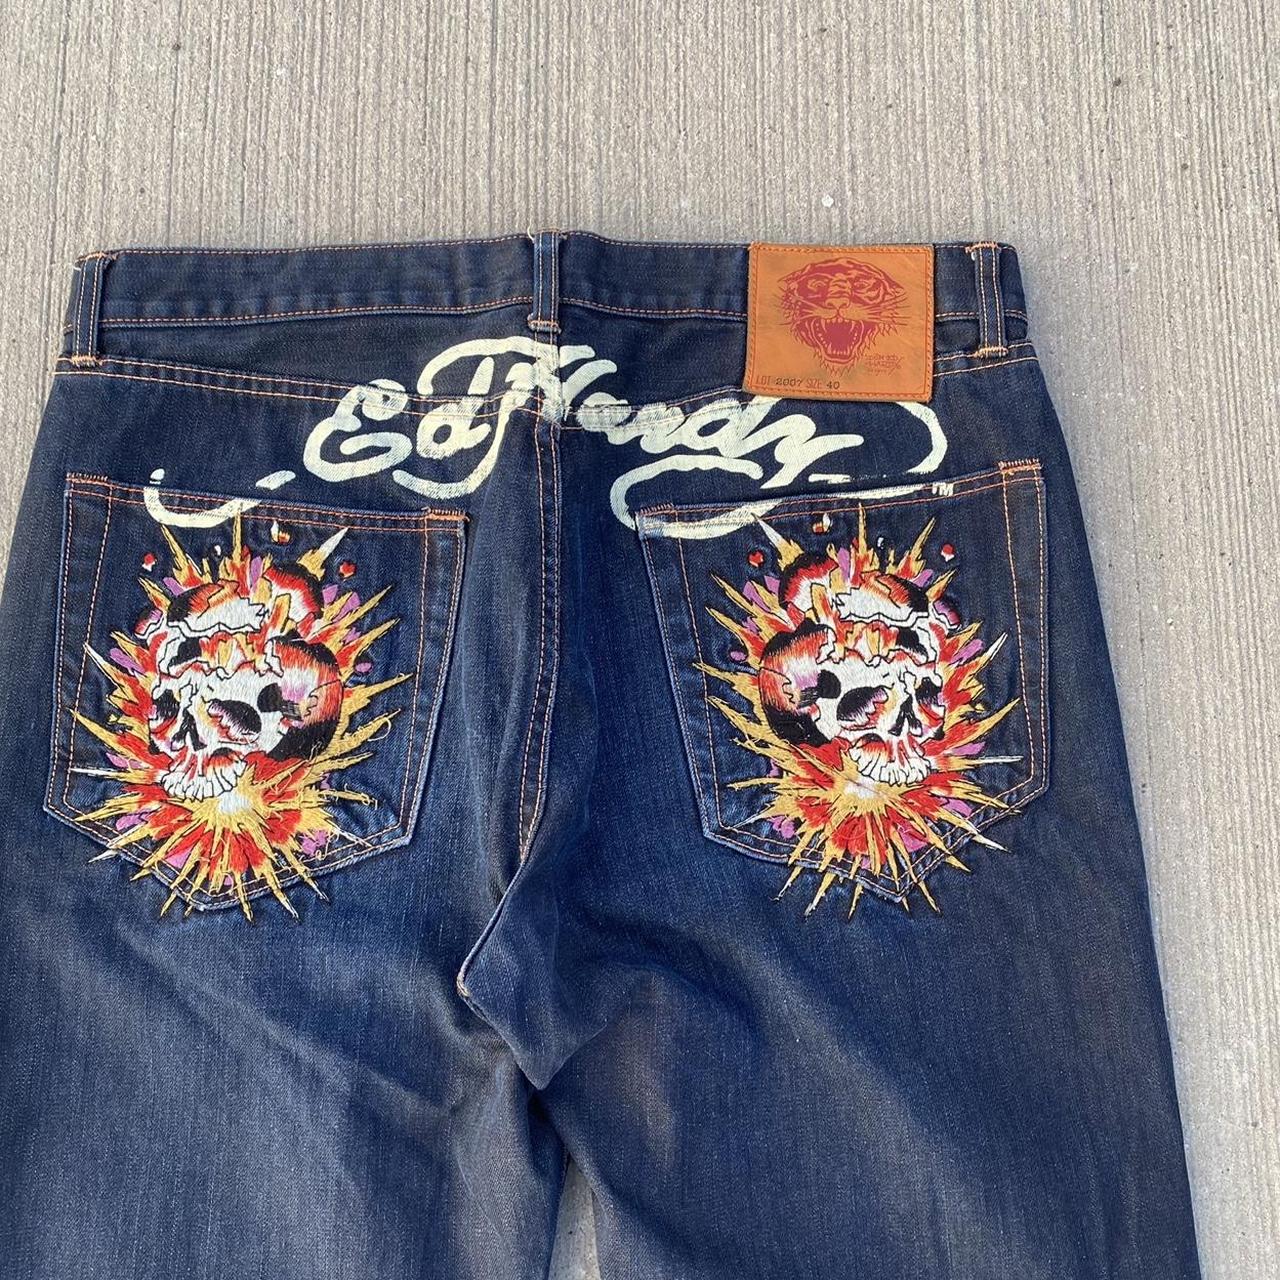 Baggy Ed Hardy Jorts #N#Y2K Embroidered Shorts#N#Cut Off... - Depop